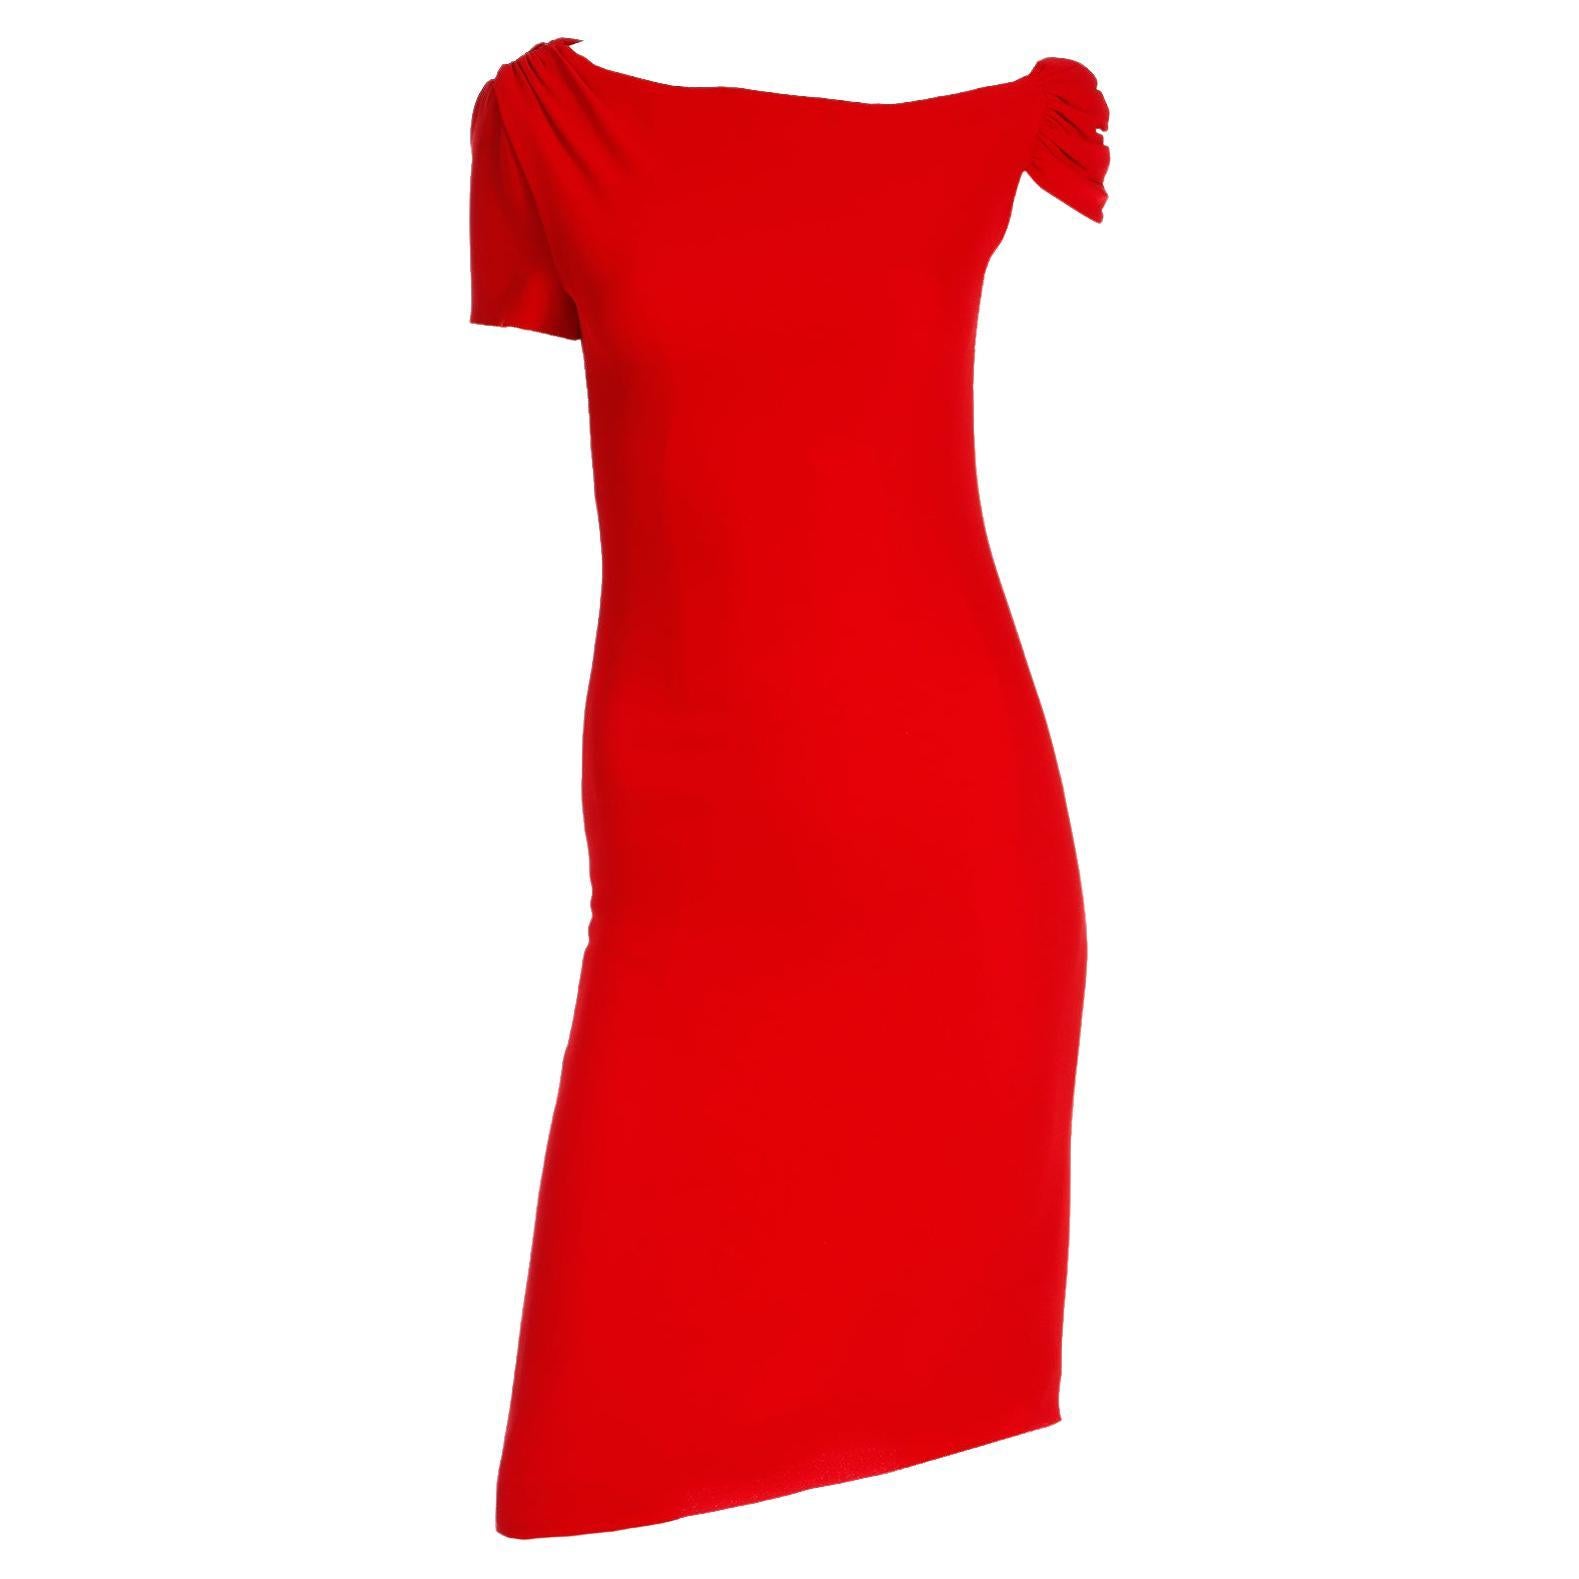 Valentino Garavani 2000s Red Silk Crepe Asymmetrical Sleeve Day or Evening Dress For Sale